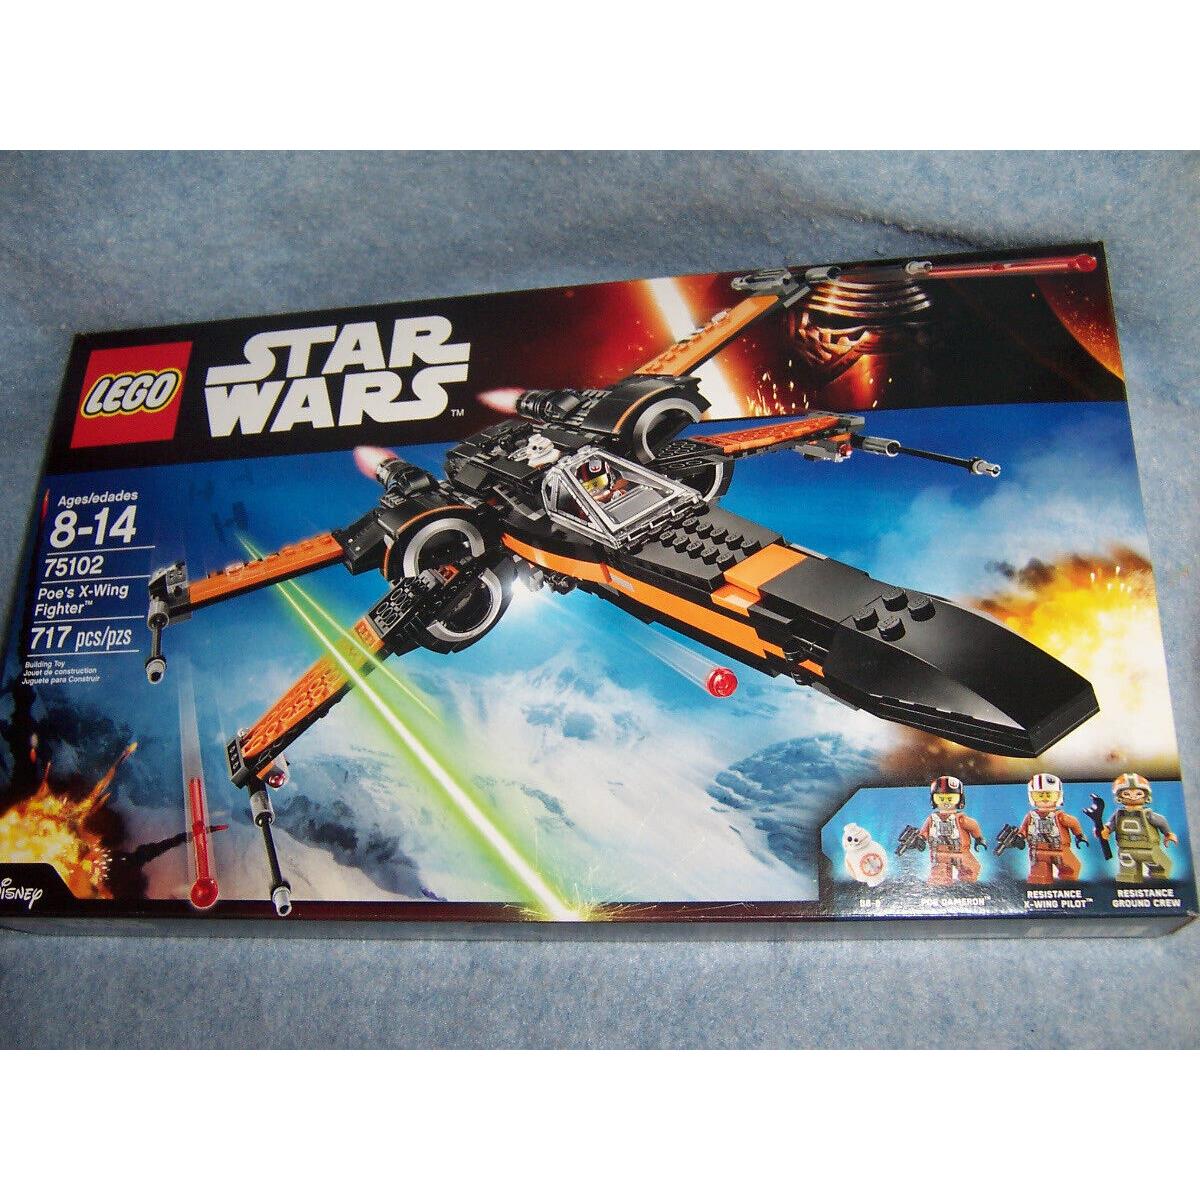 Lego Star Wars 75102 Poe`s X-wing Fighter 717pcs Set